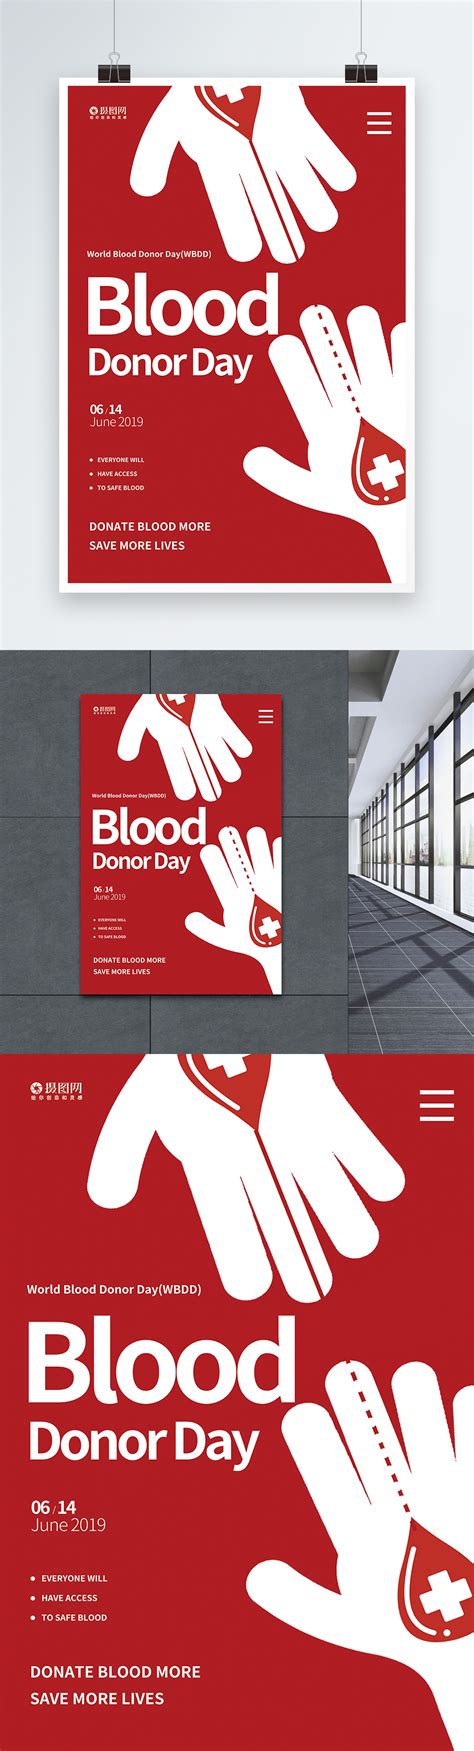 Donor darah merupakan kegiatan ketika anda bersedia memberikan darah kepada seseorang secara sukarela. Prescottmonstercross: Undangan Donor Darah Dalam Bahasa ...